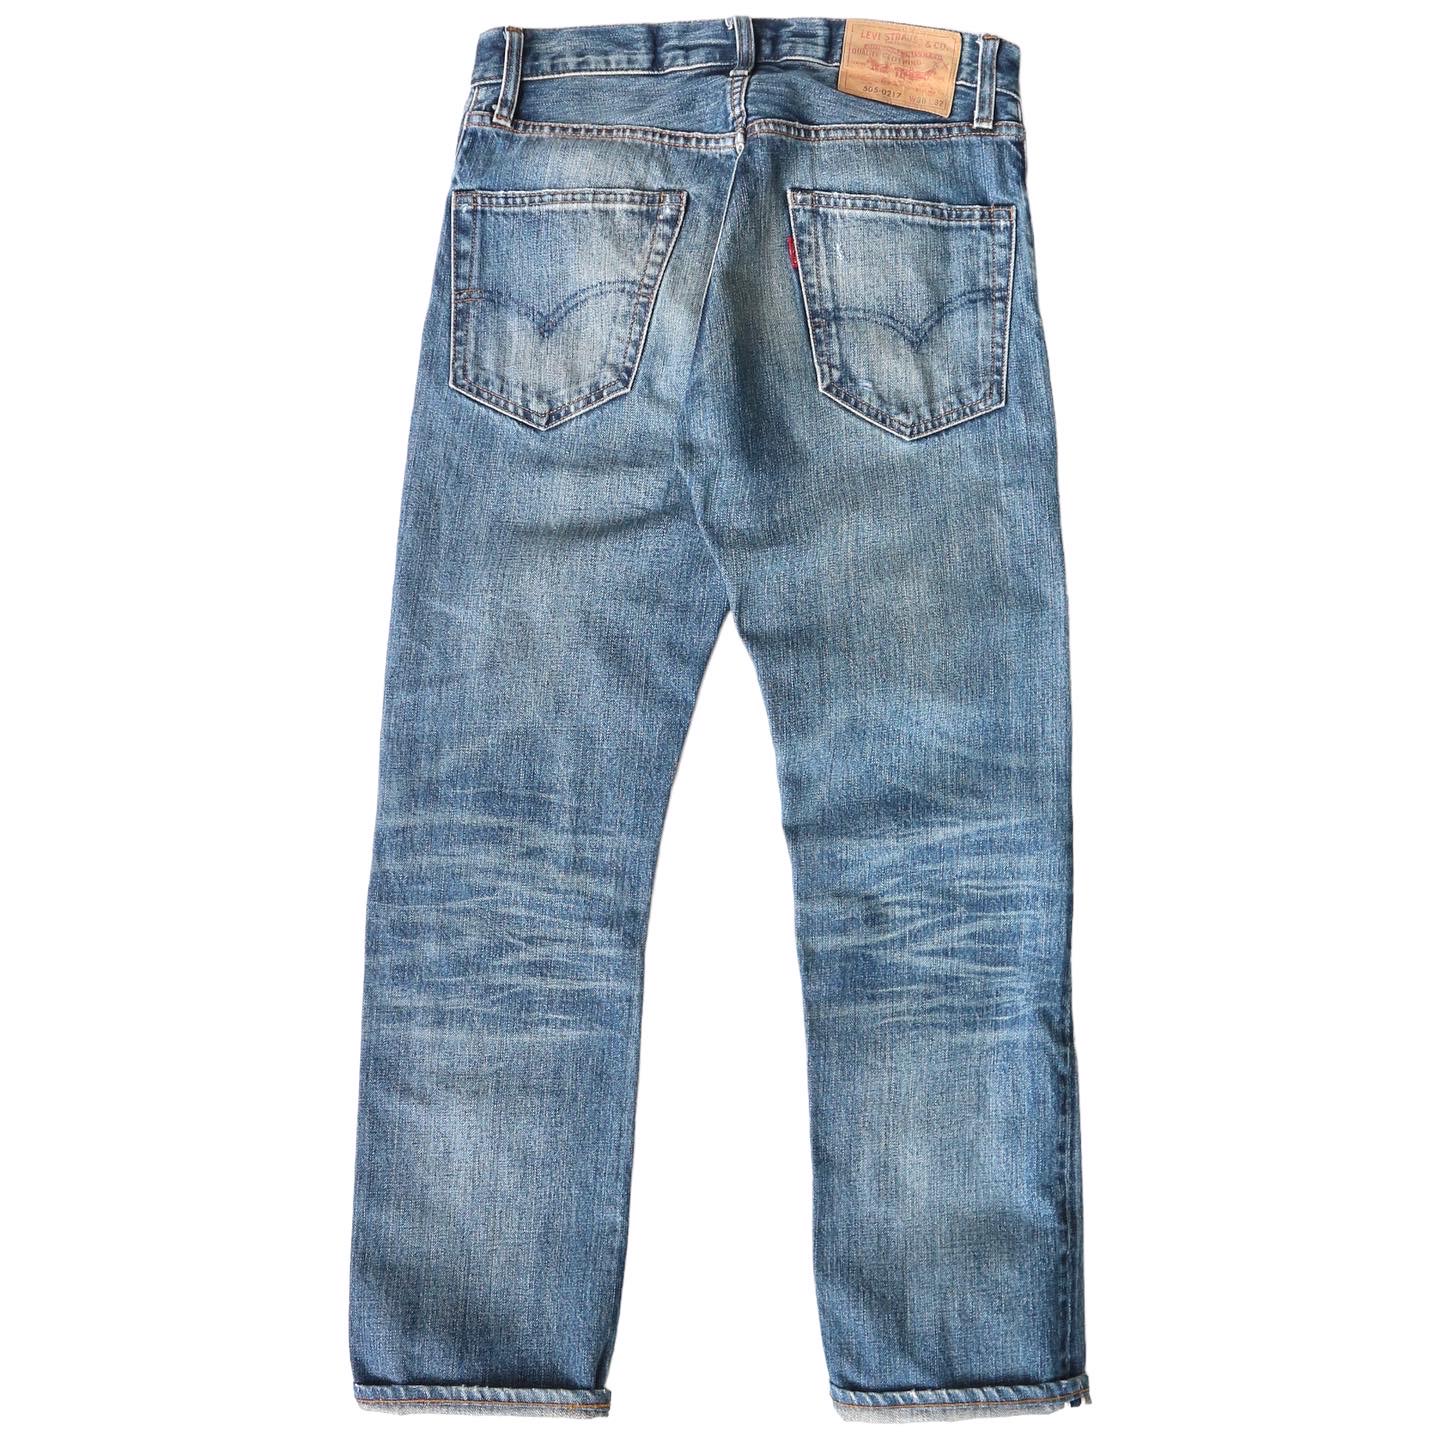 LEVI'S VINTAGE CLOTHING 1967 505 Selvedge Denim Jeans Size 29 denimister